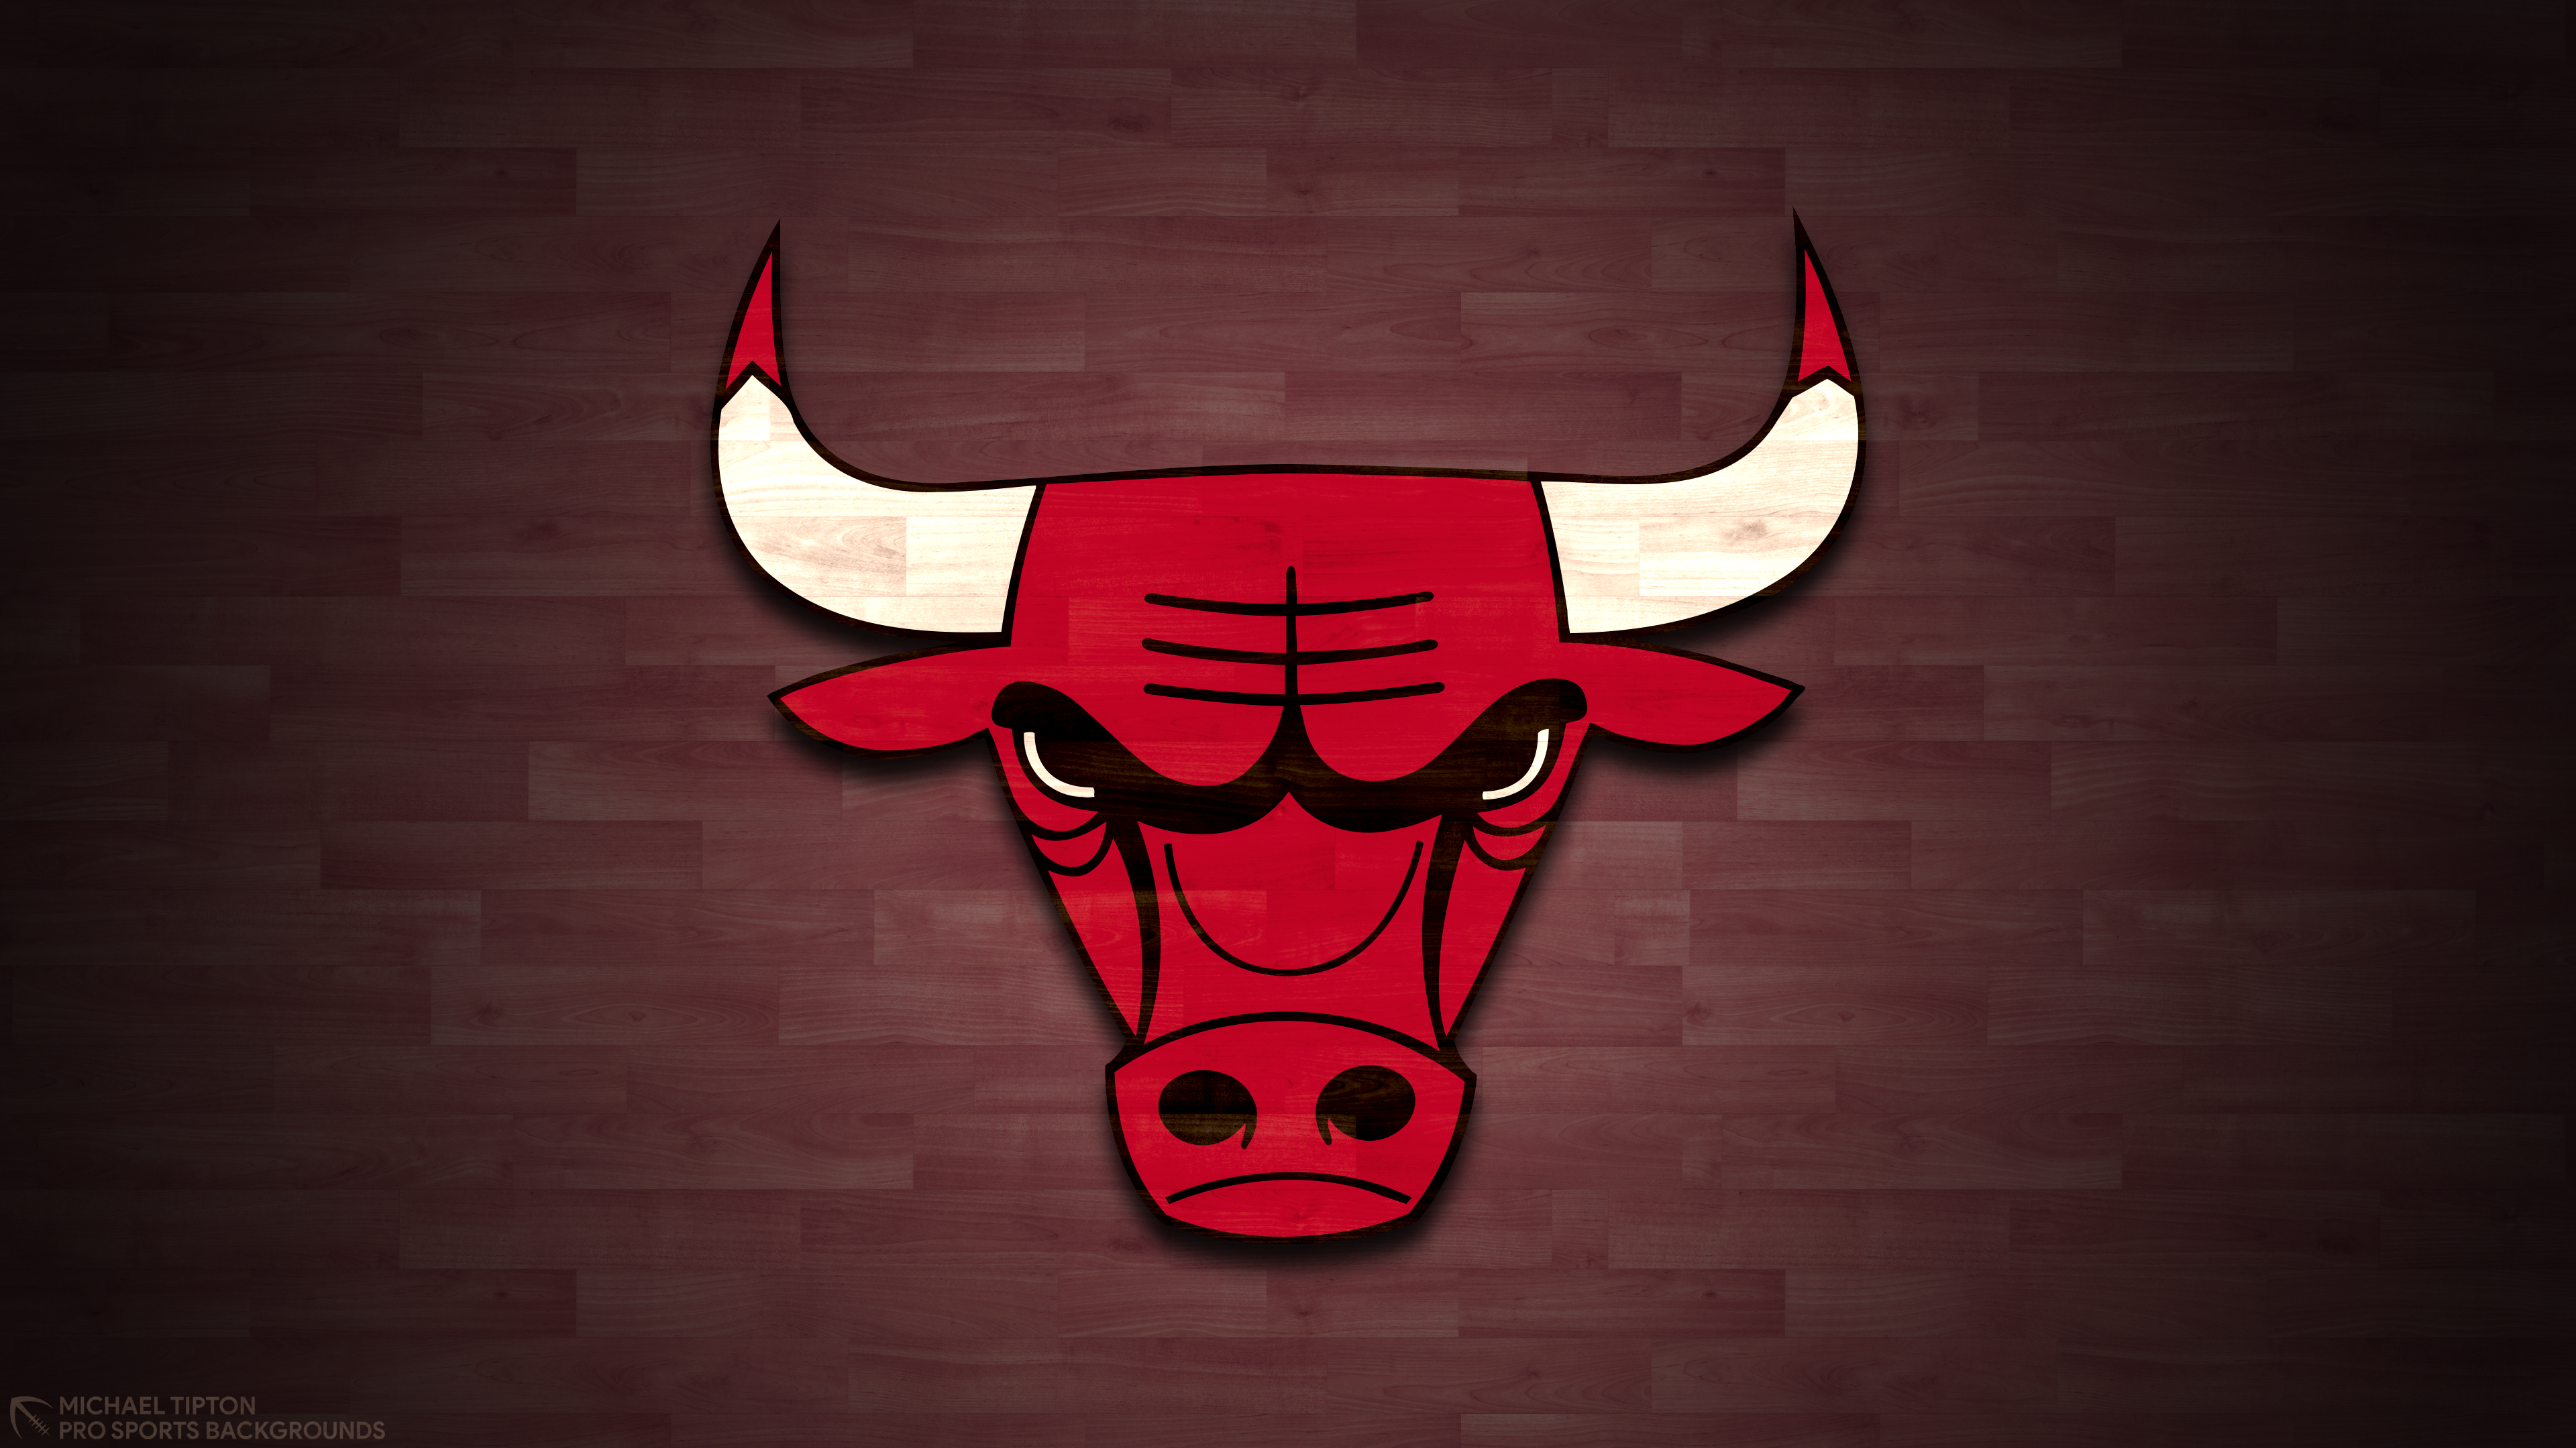 Sports Chicago Bulls 4k Ultra HD Wallpaper By Michael Tipton